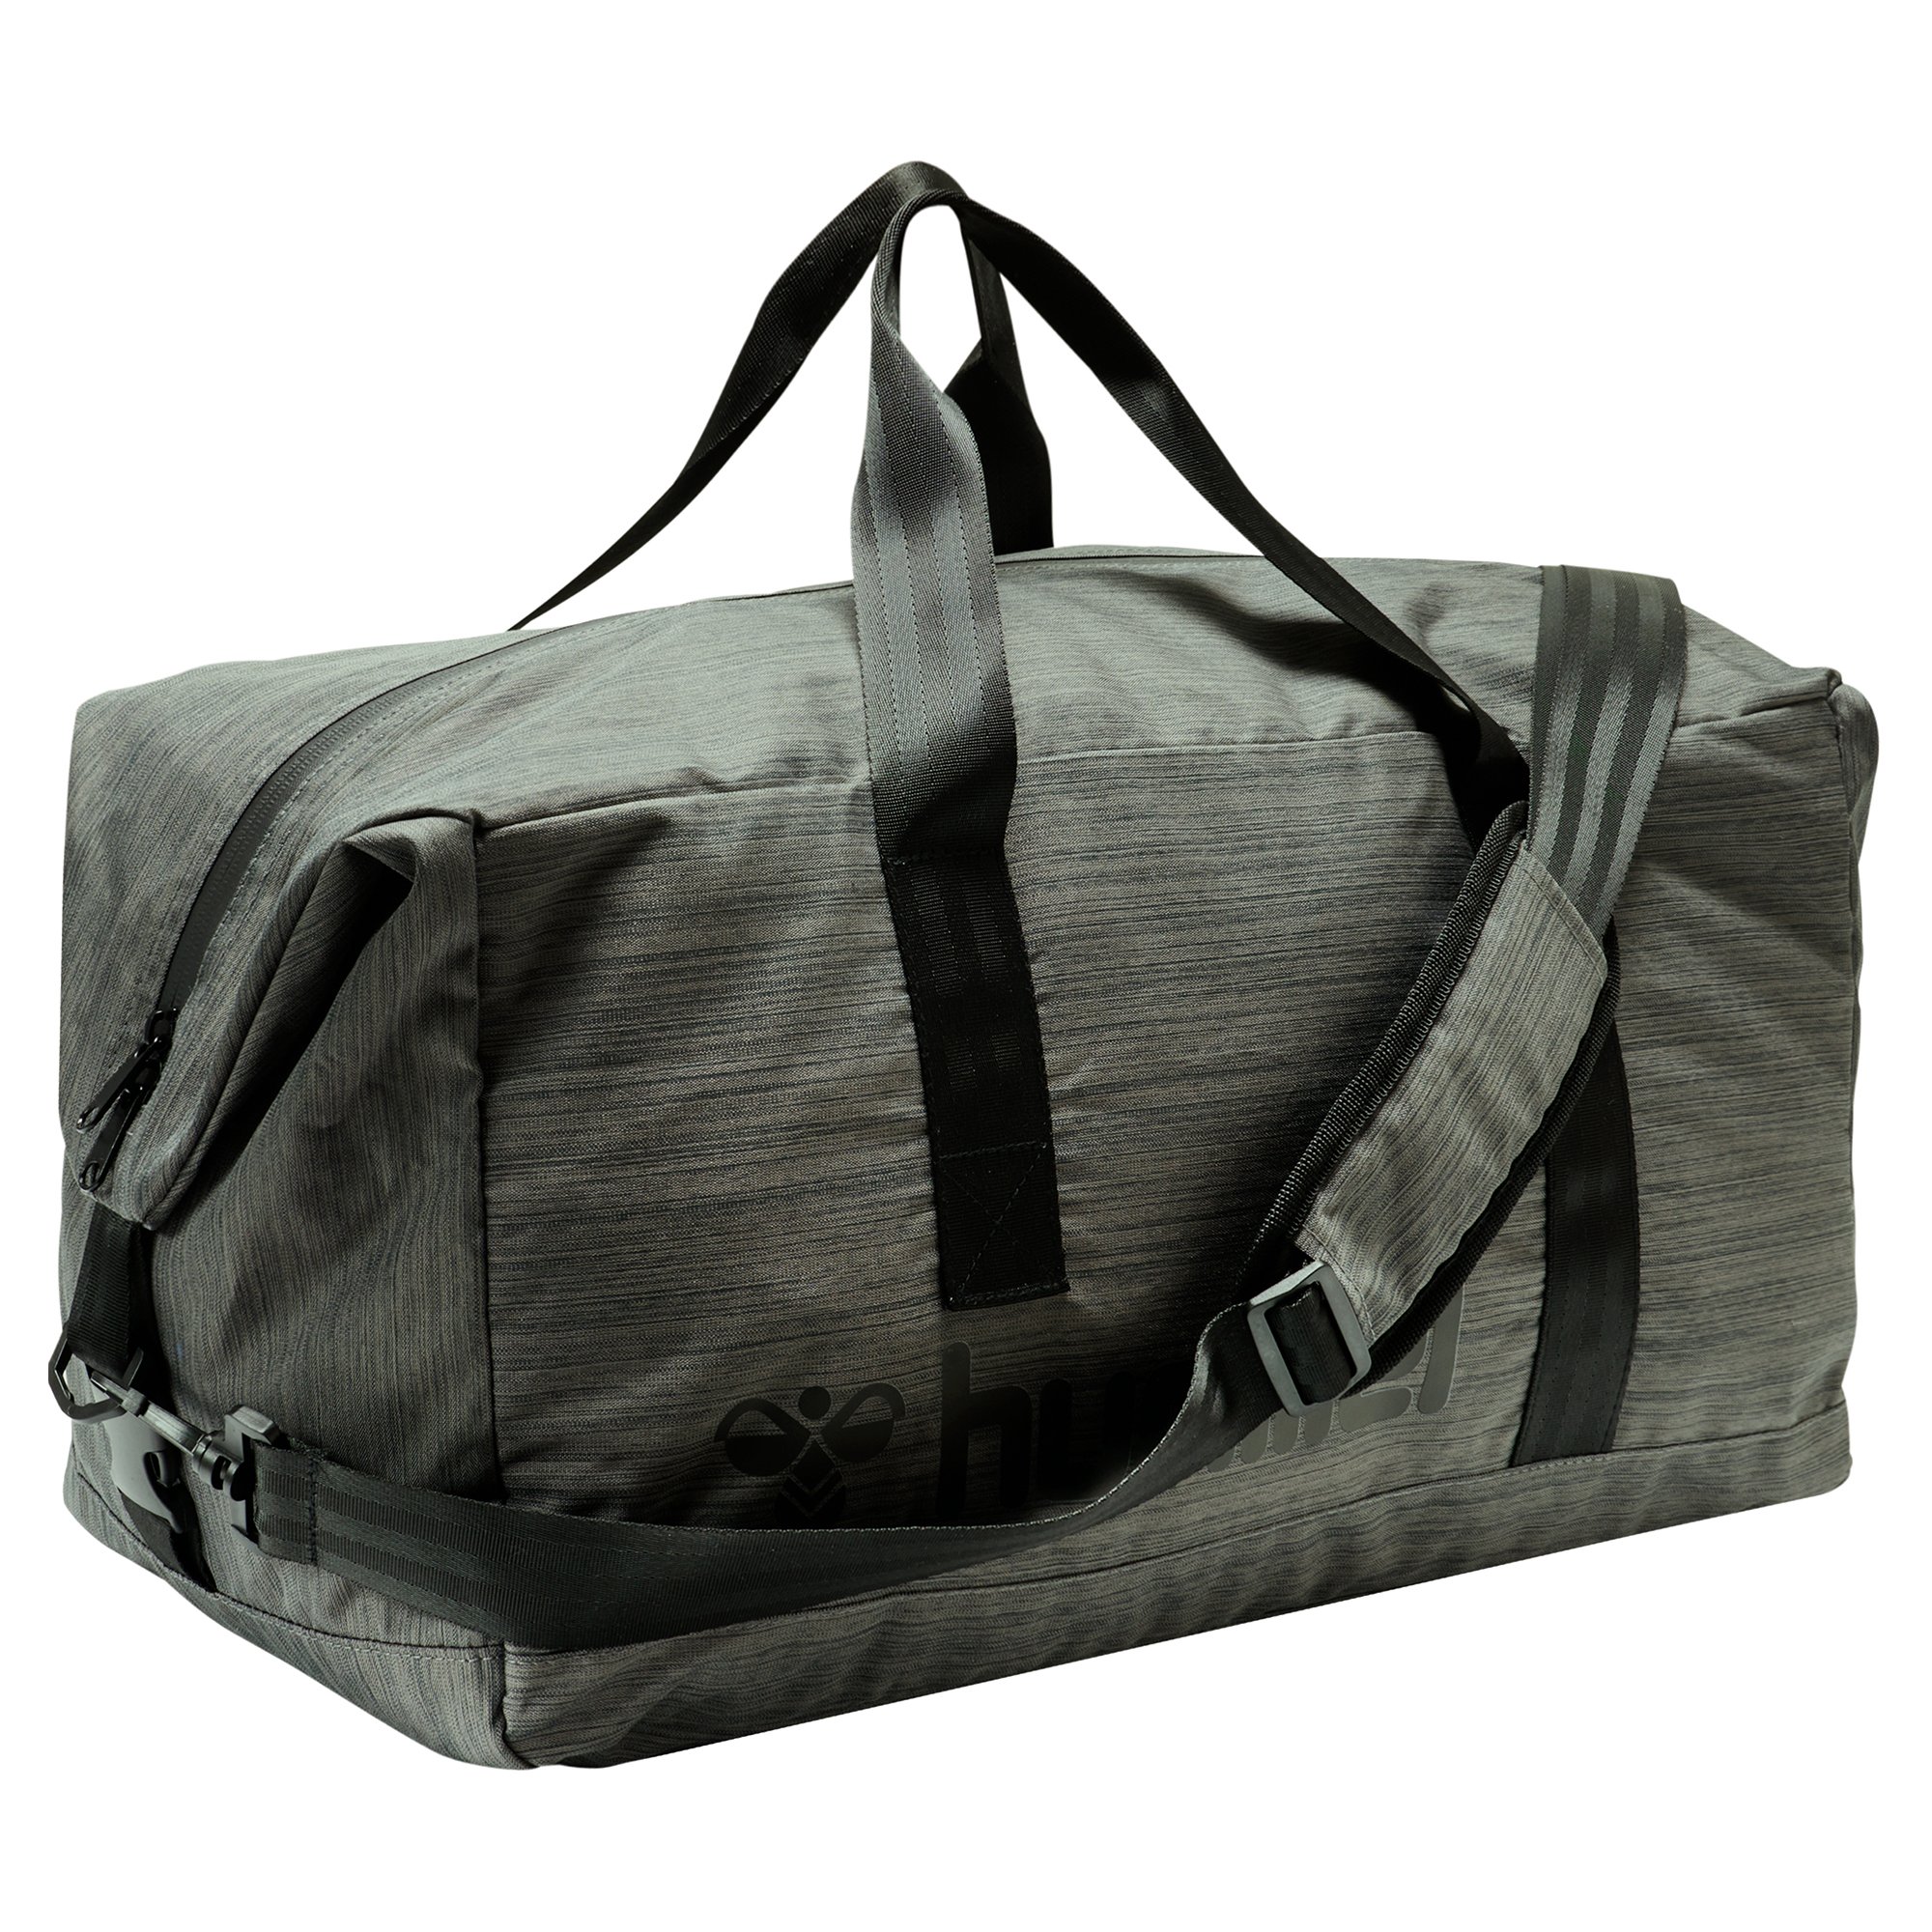 Hummel Urban Duffel Bag